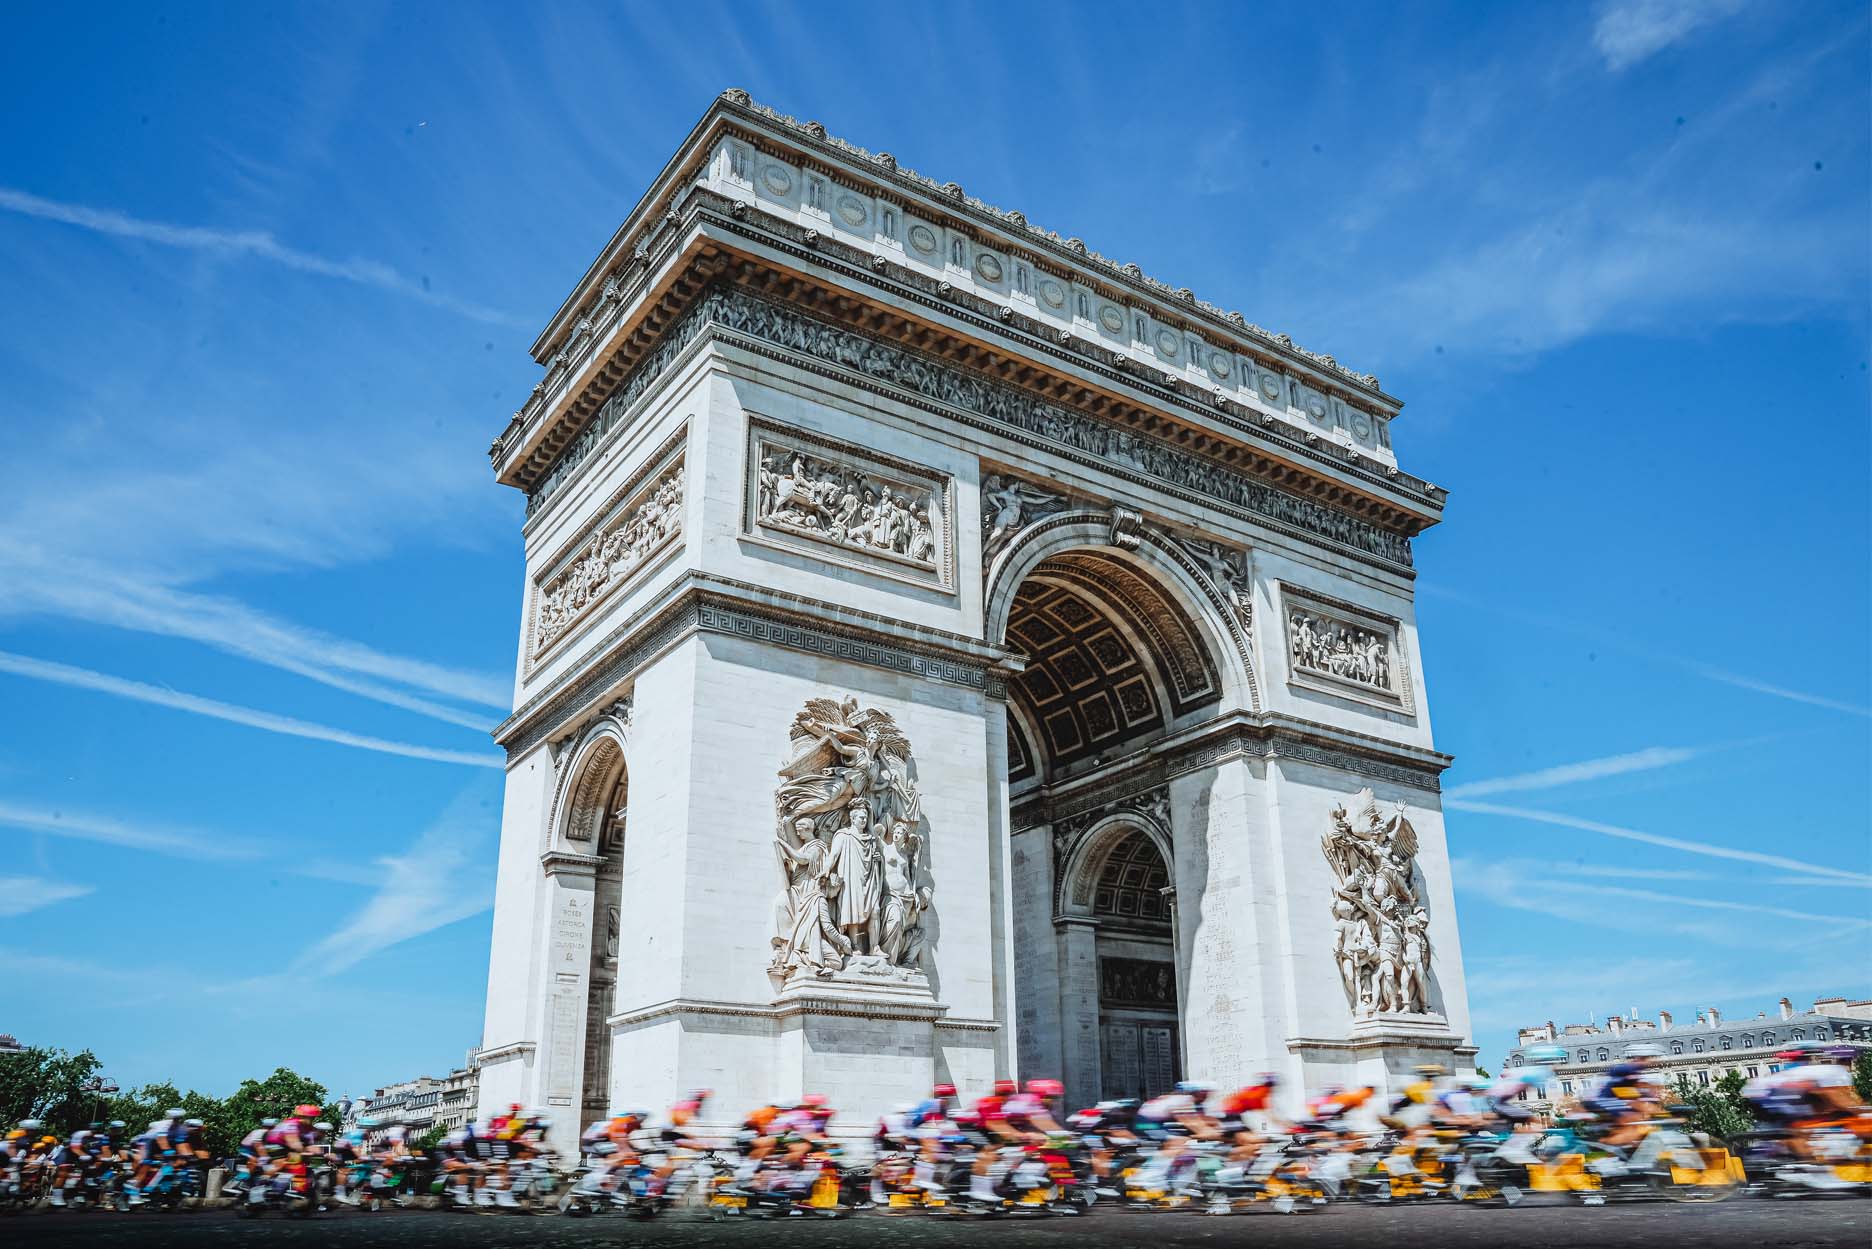 Shimano Builds Toward the Tour de France